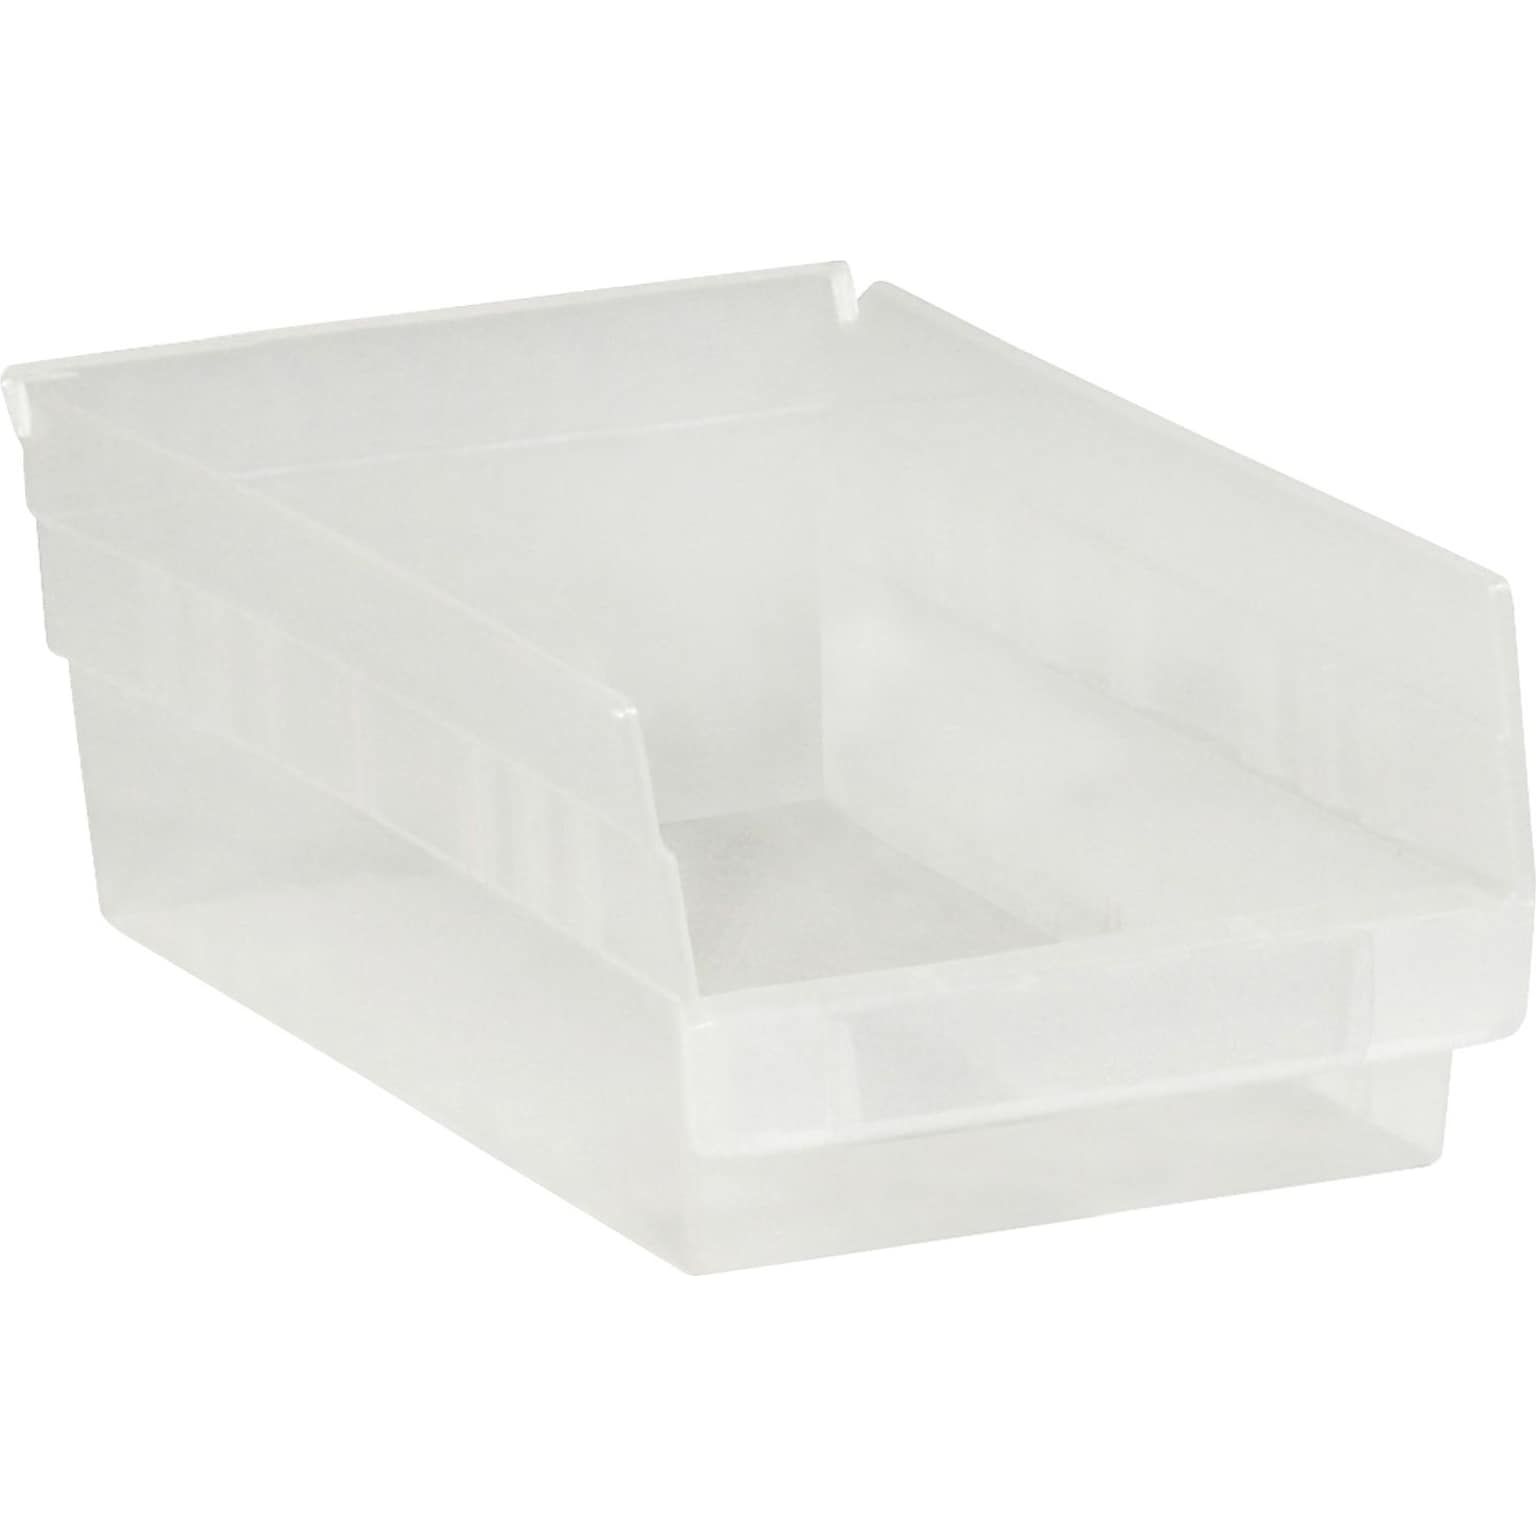 Quill Brand 11 5/8 x 8 3/8 x 4 Plastic Shelf Bin, Clear, 20/Case (BINPS104CL)